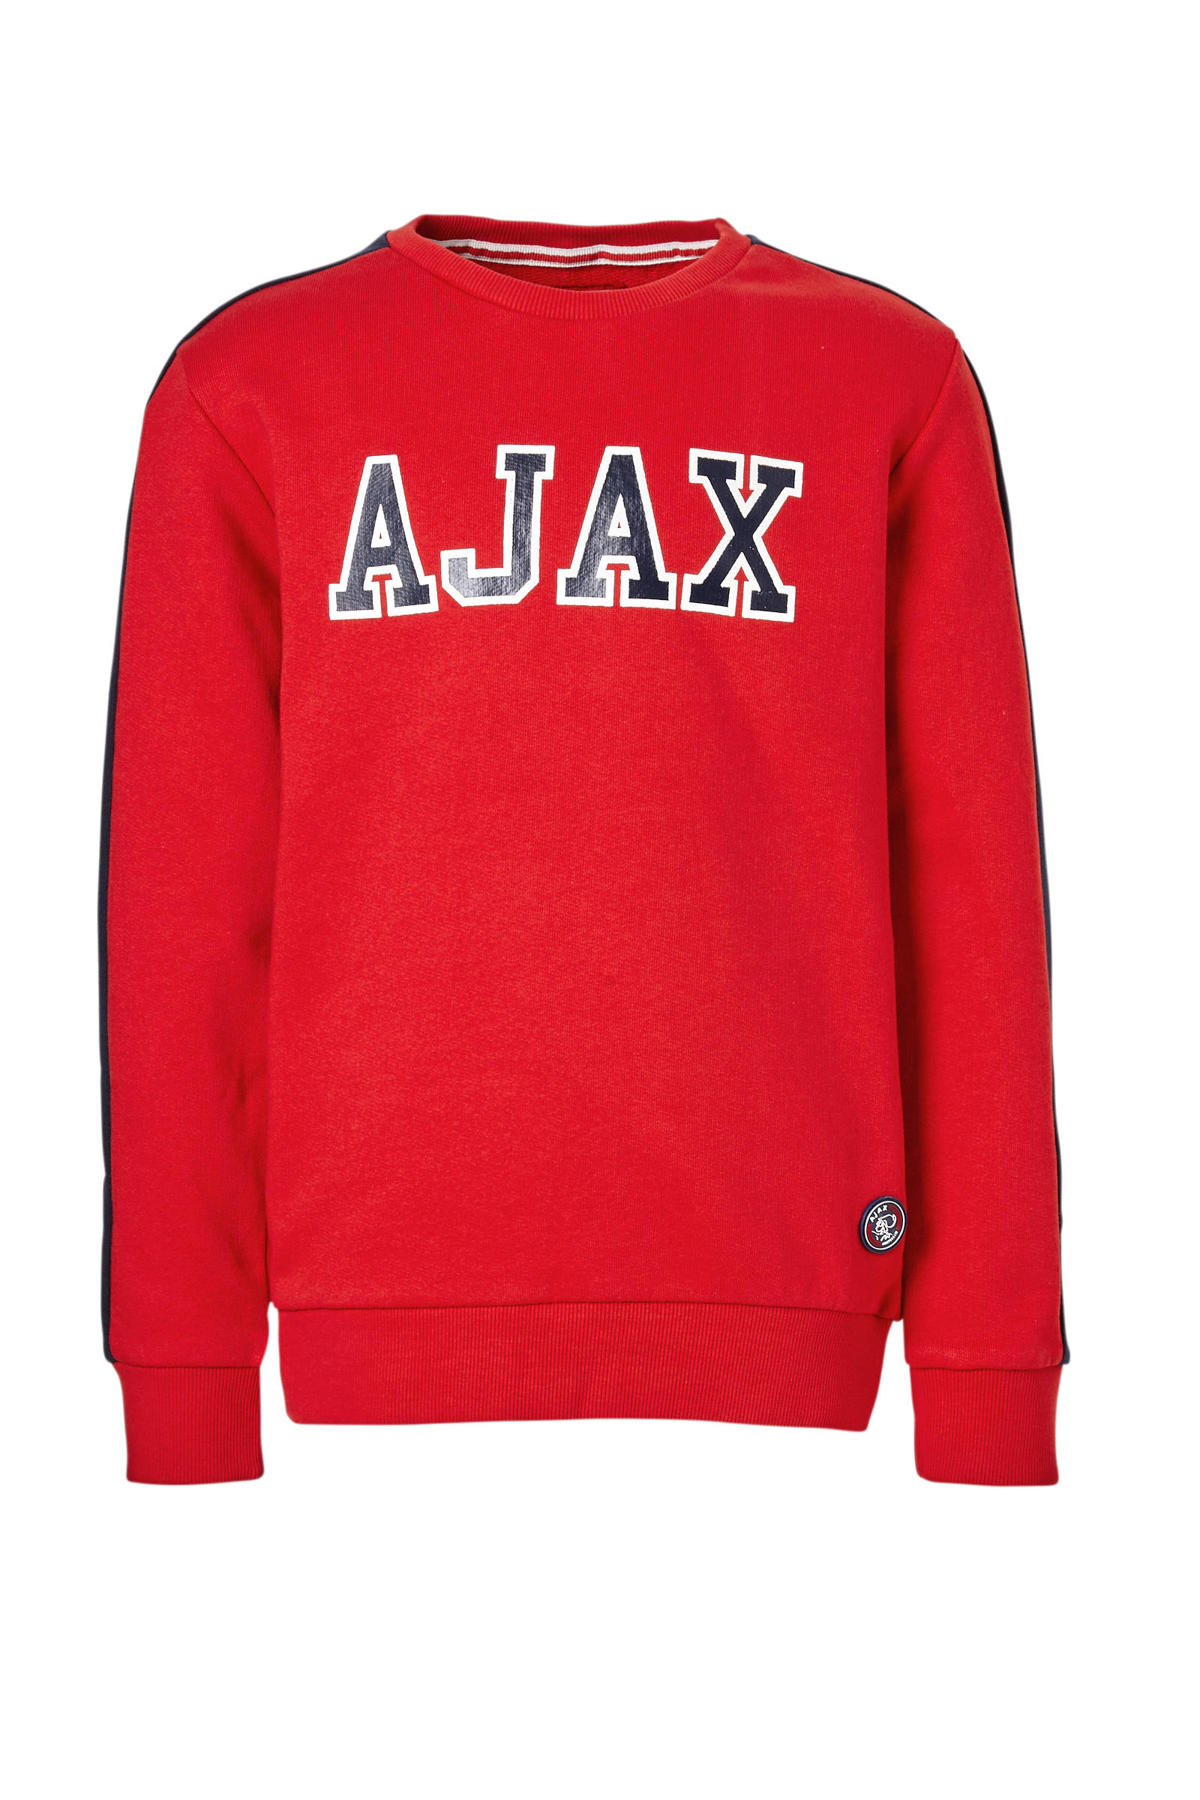 Ajax sweater Rowen rood |